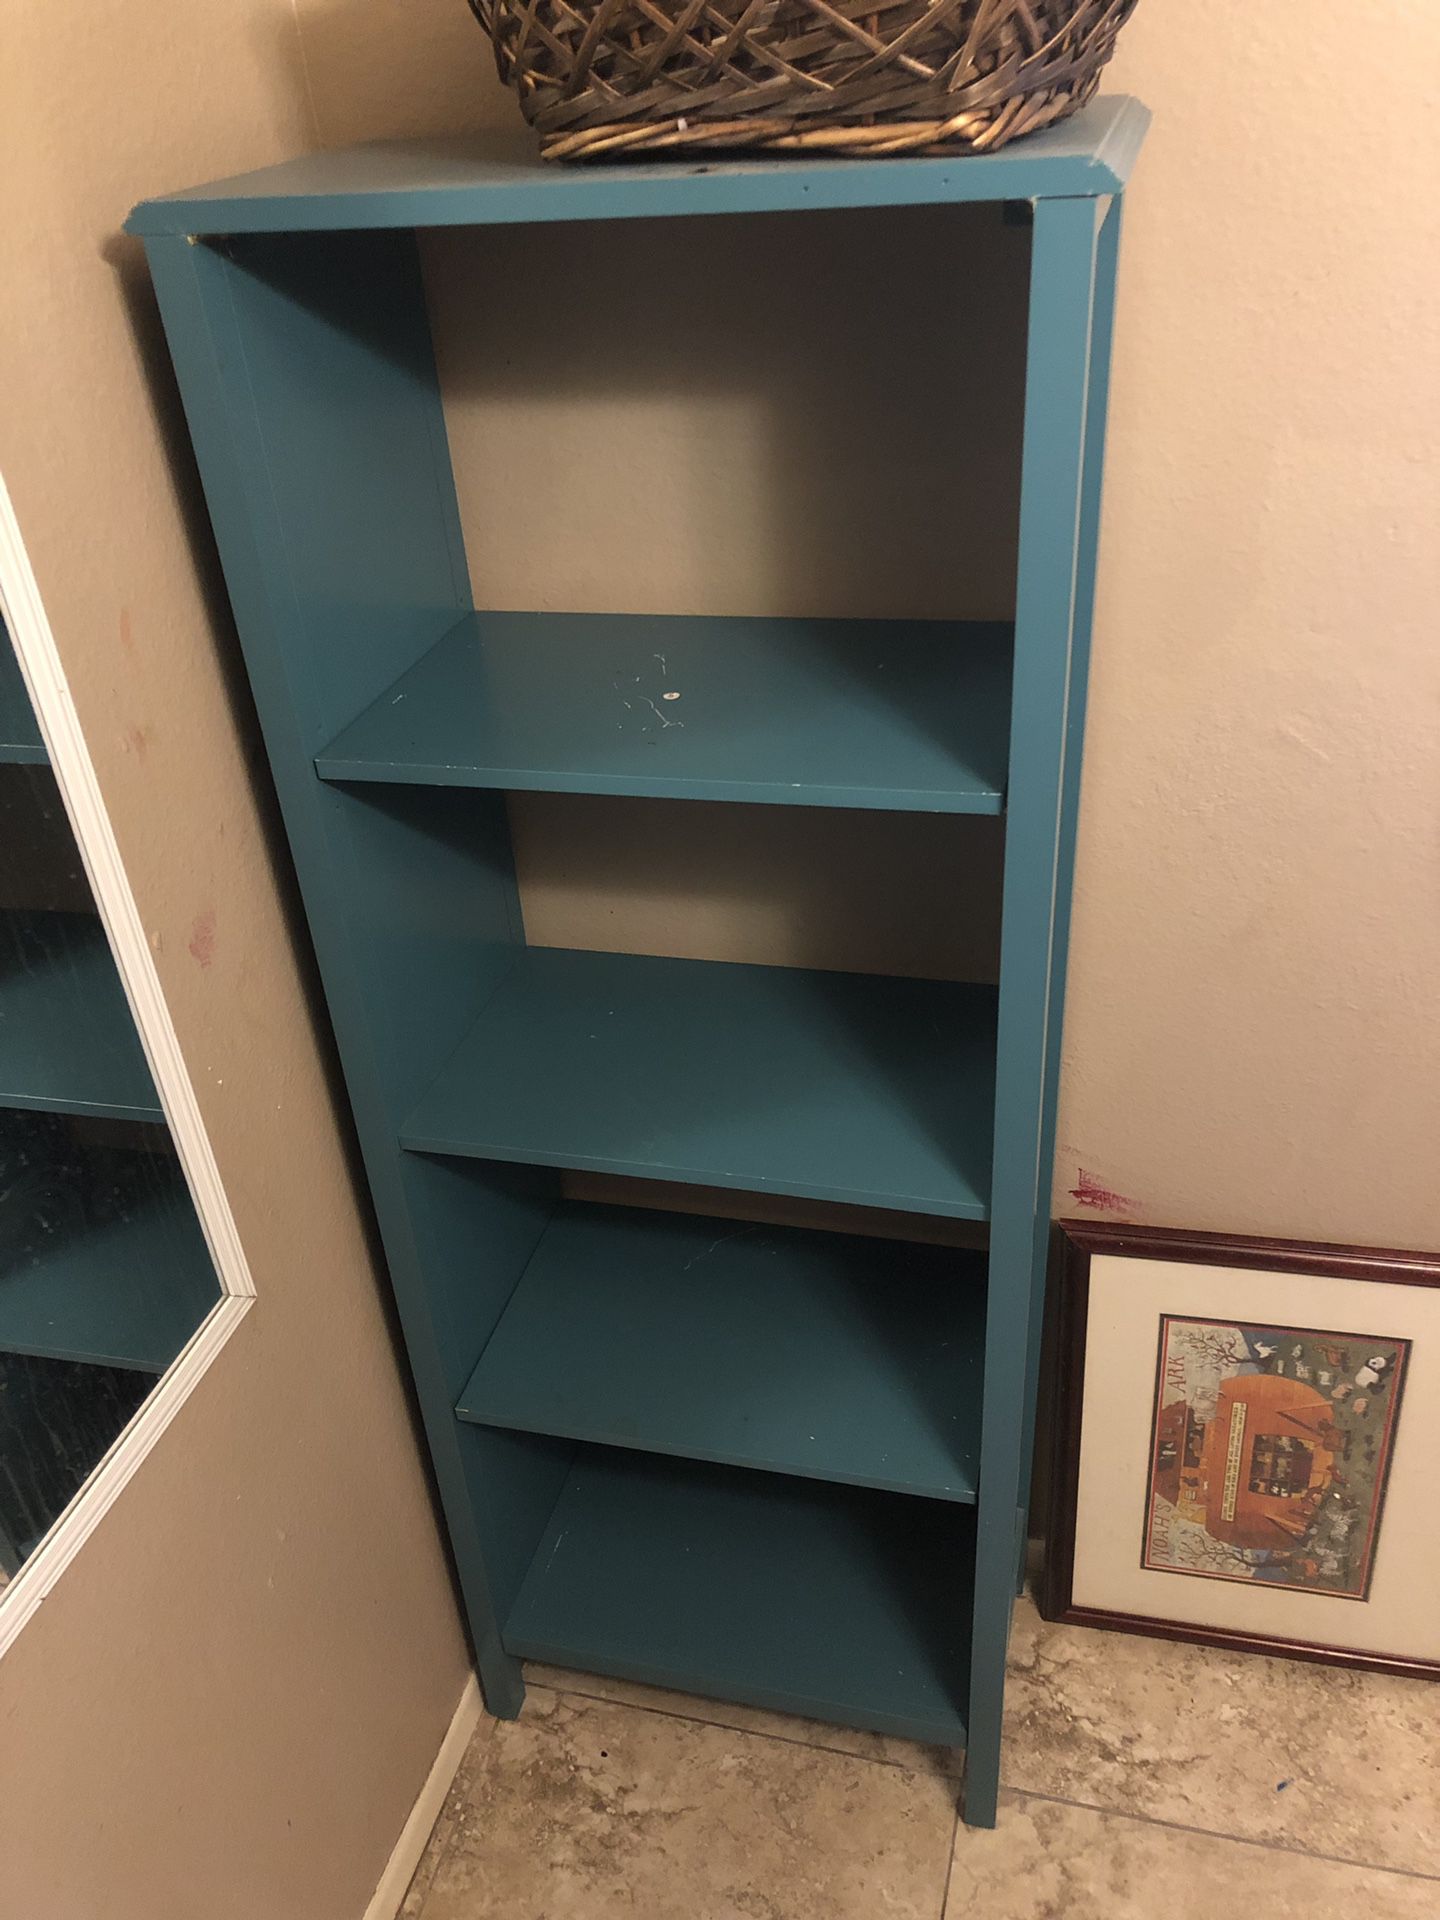 Small 4 shelf unit